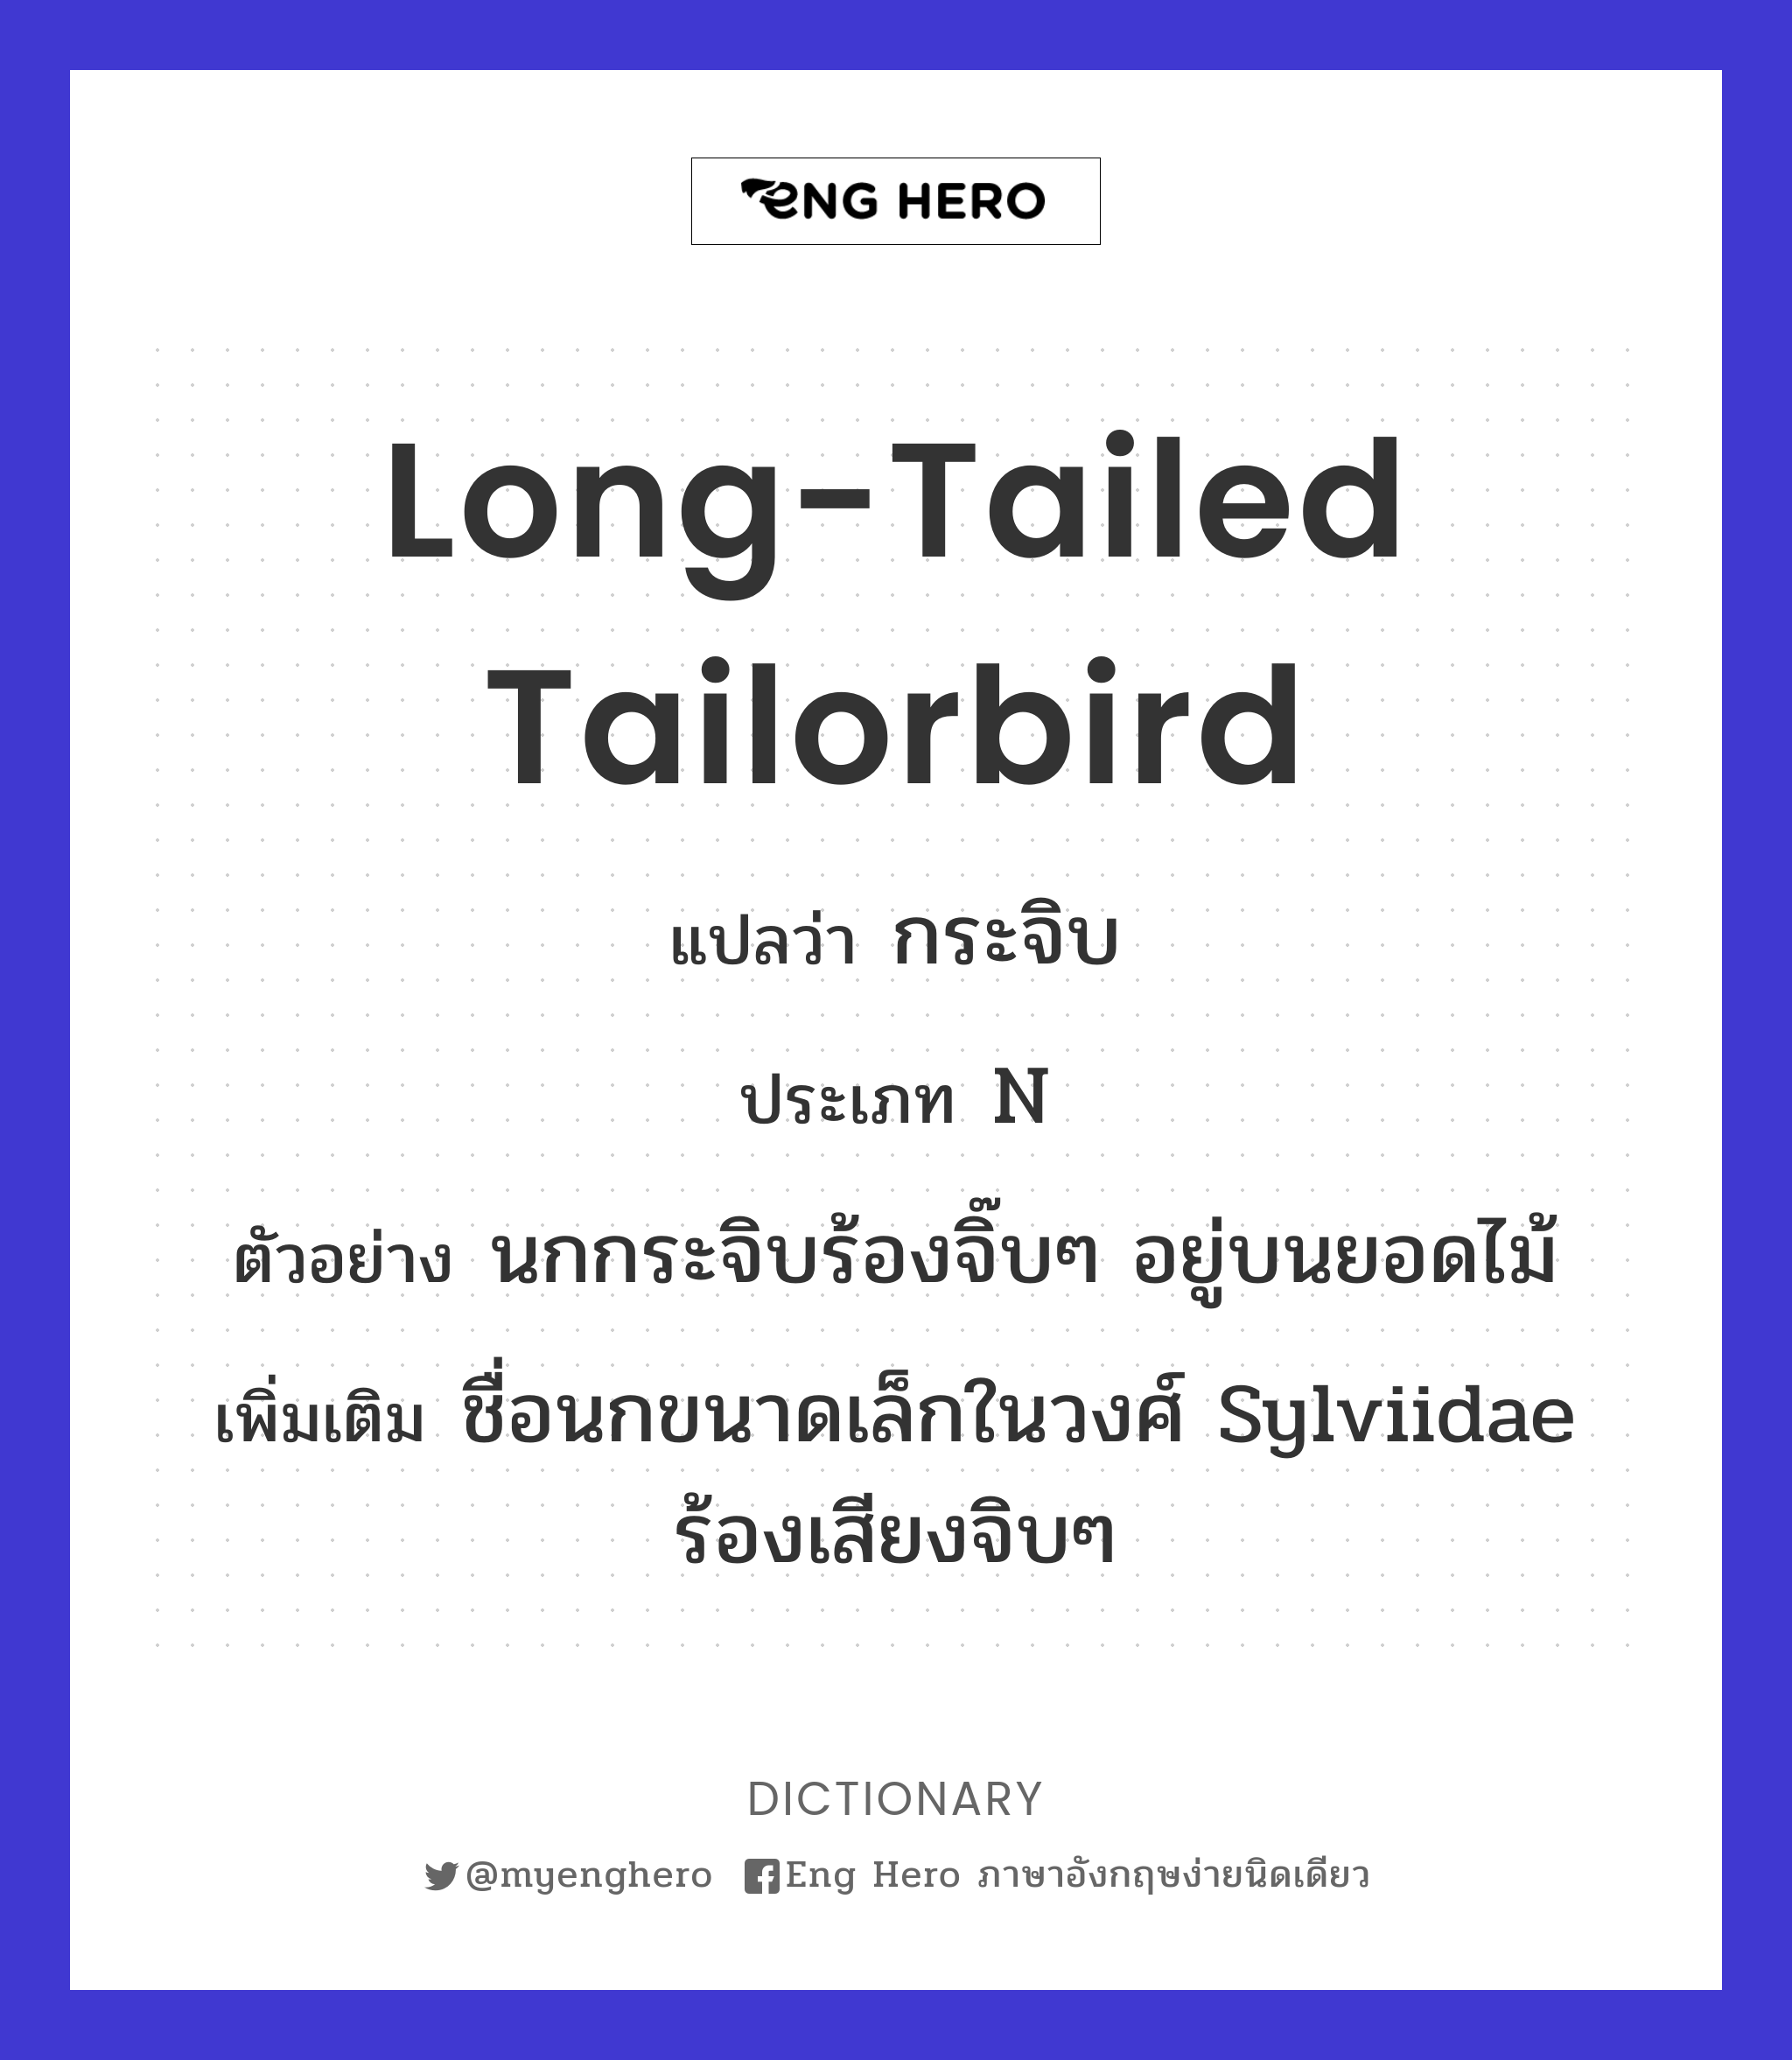 Long-tailed Tailorbird